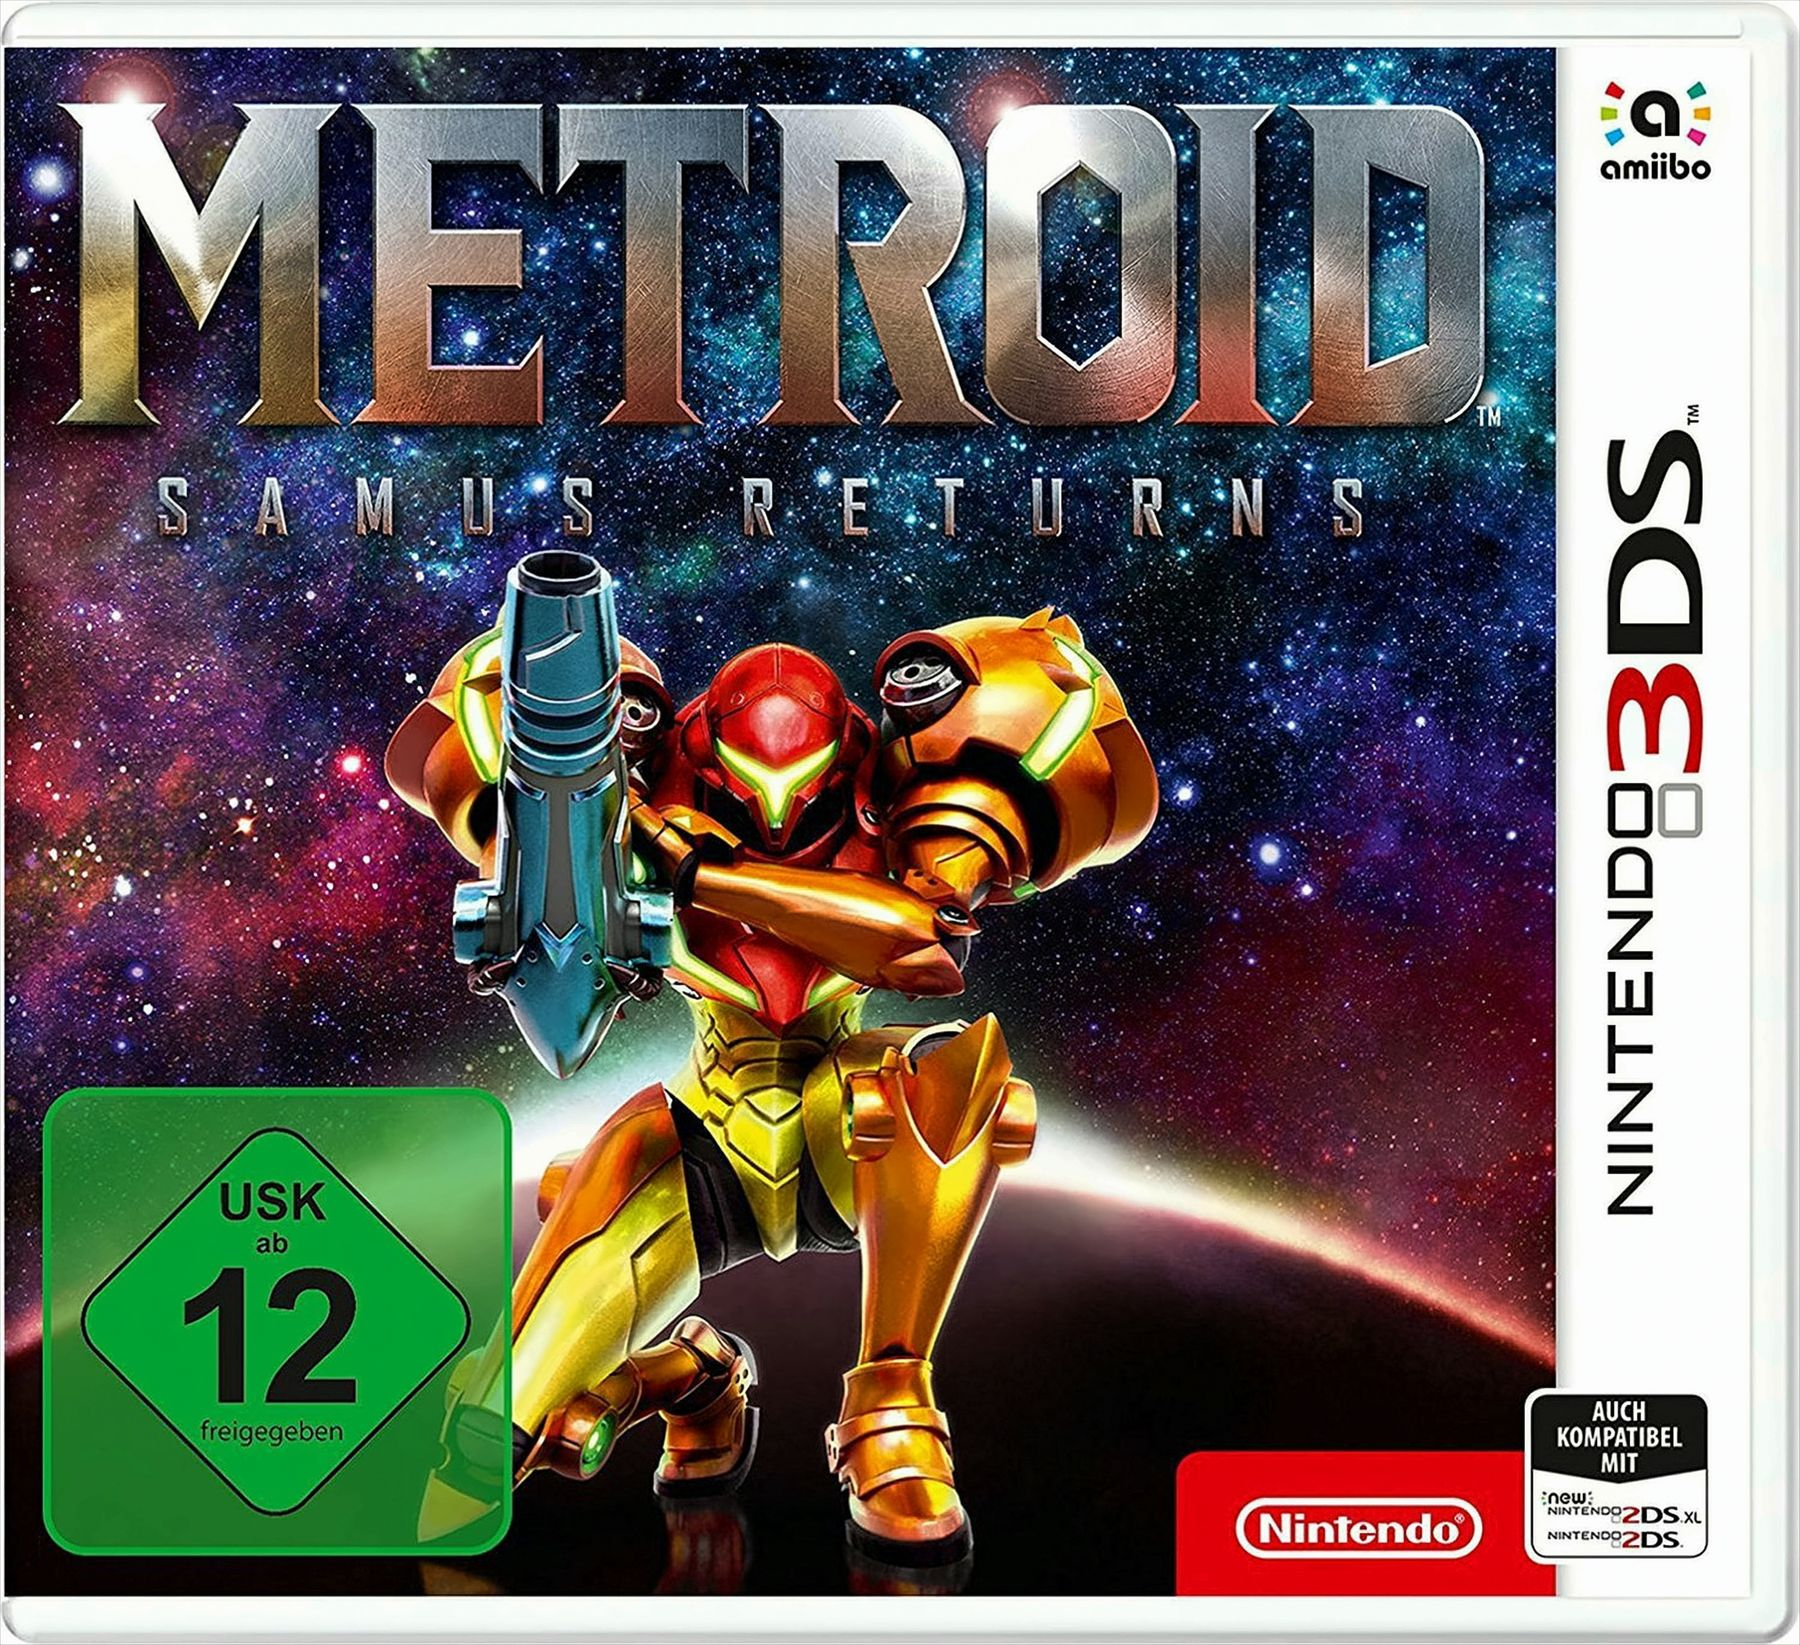 Samus - Metroid: Returns 3DS] [Nintendo